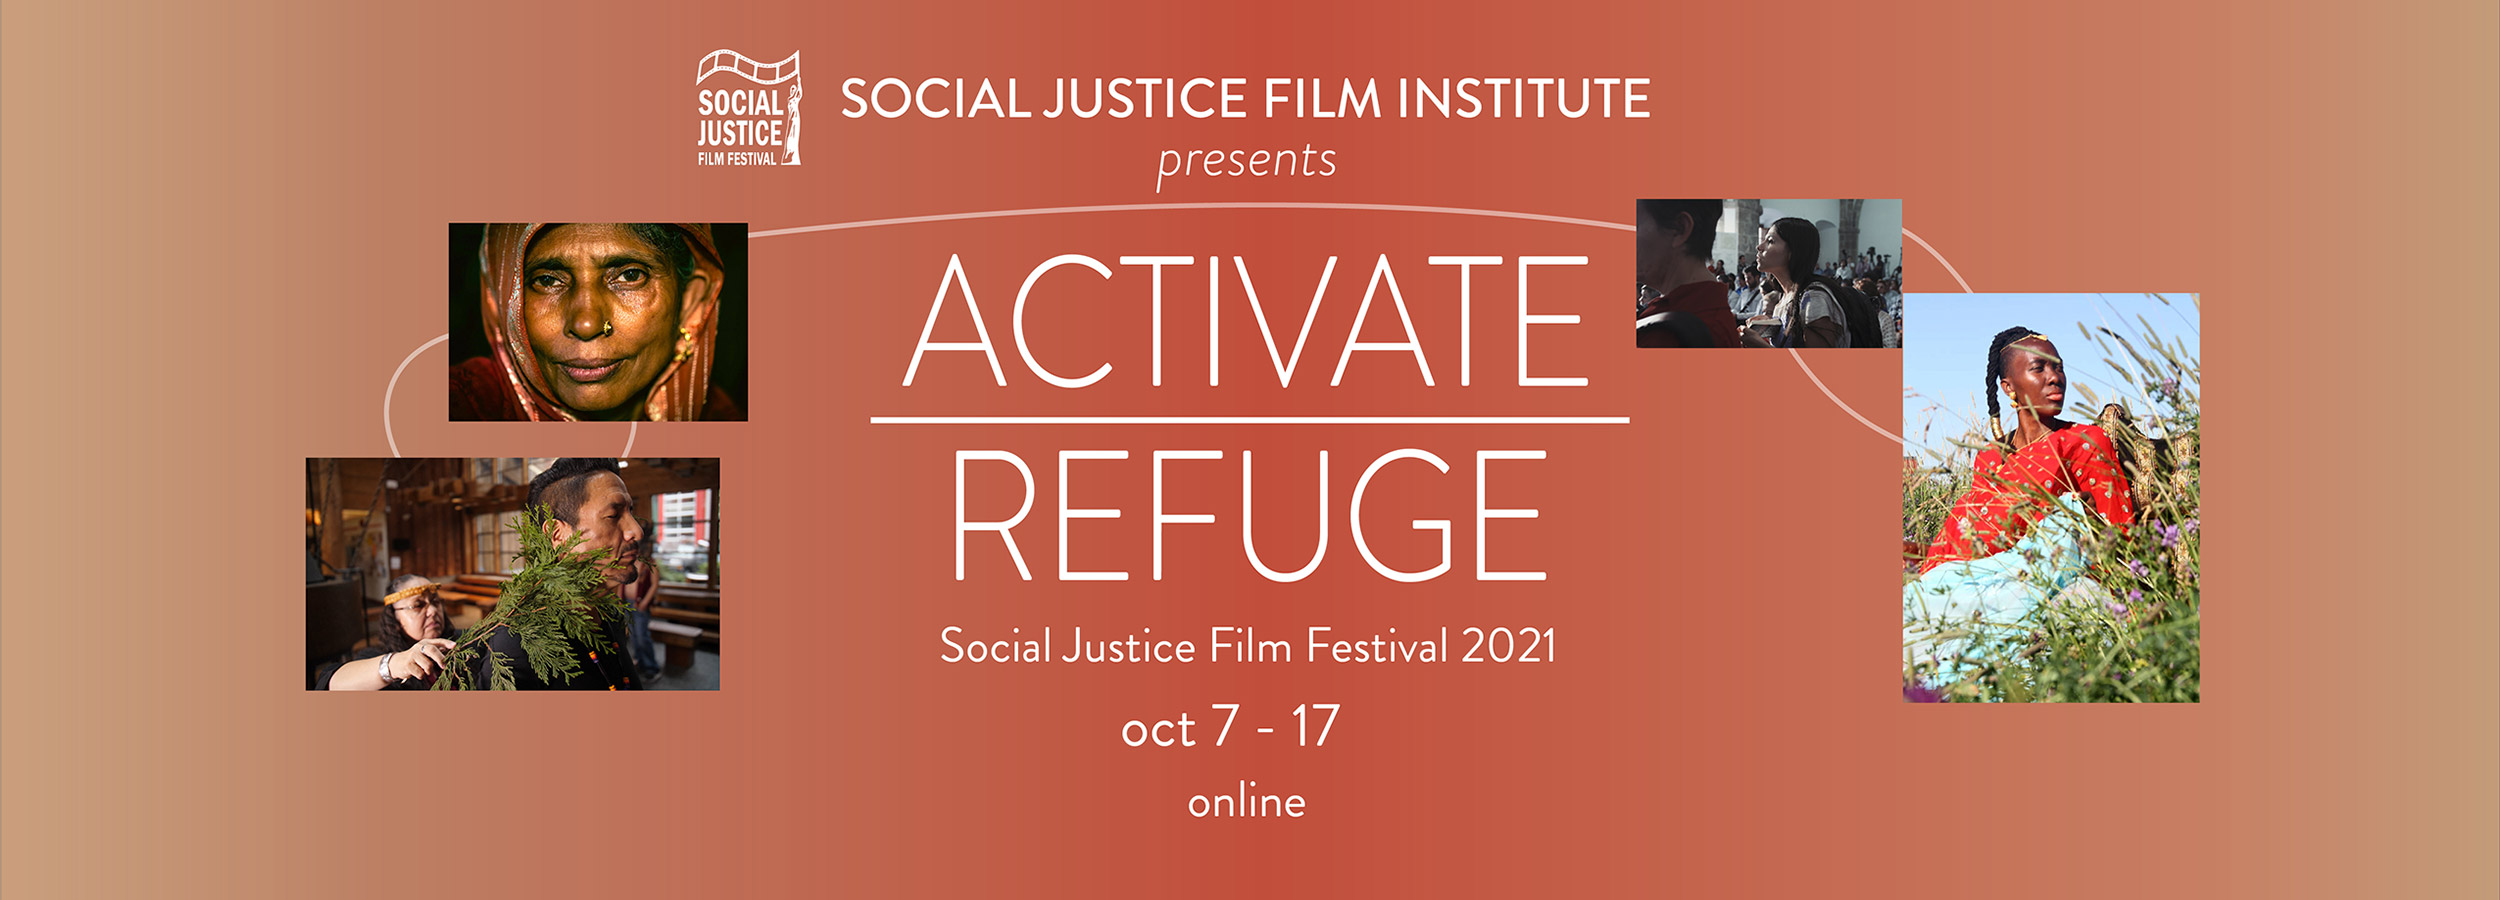 Social Justice Film Festival 2021